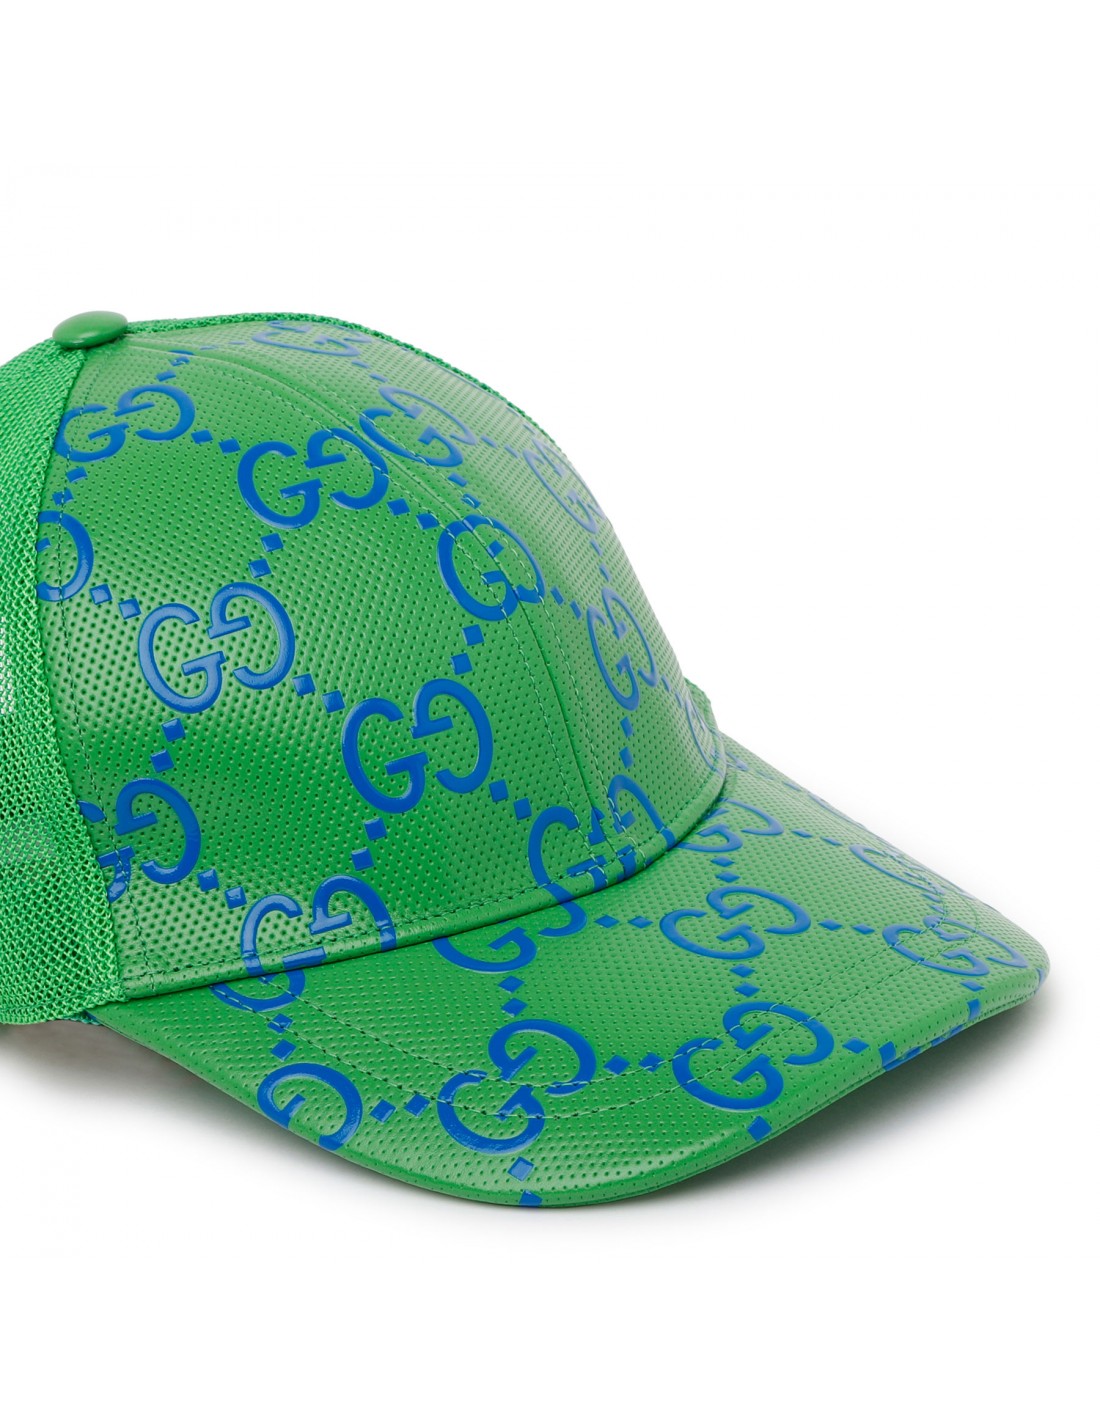 GG leather baseball cap in green